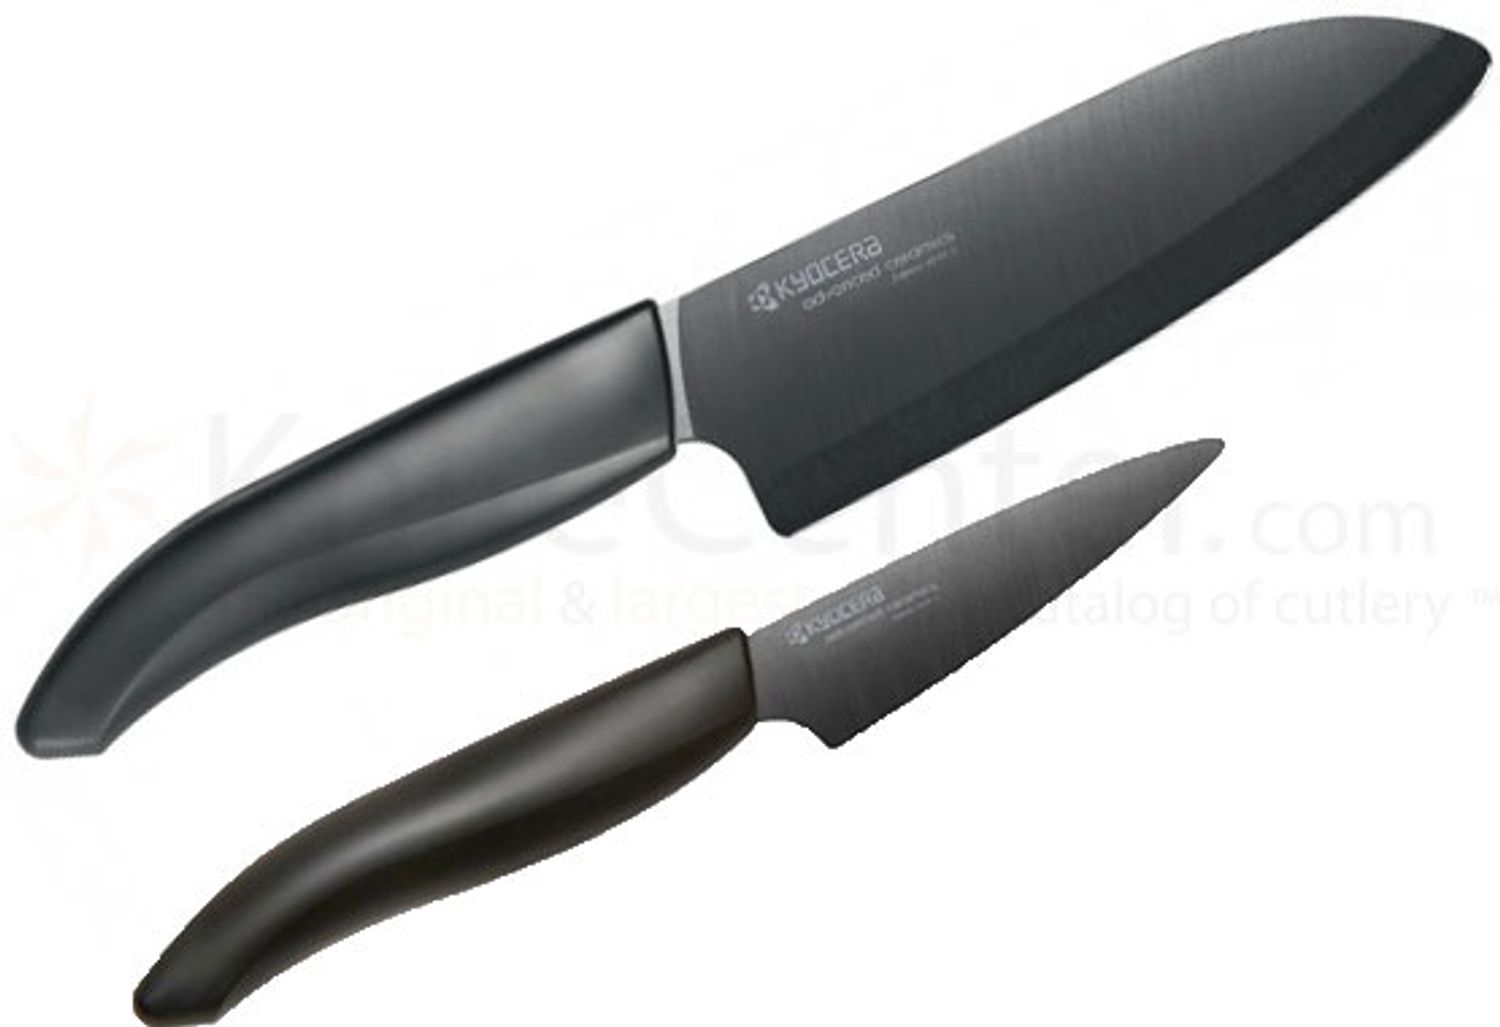 Kyocera - Innovation - Chef's Knife - Ceramic - 7